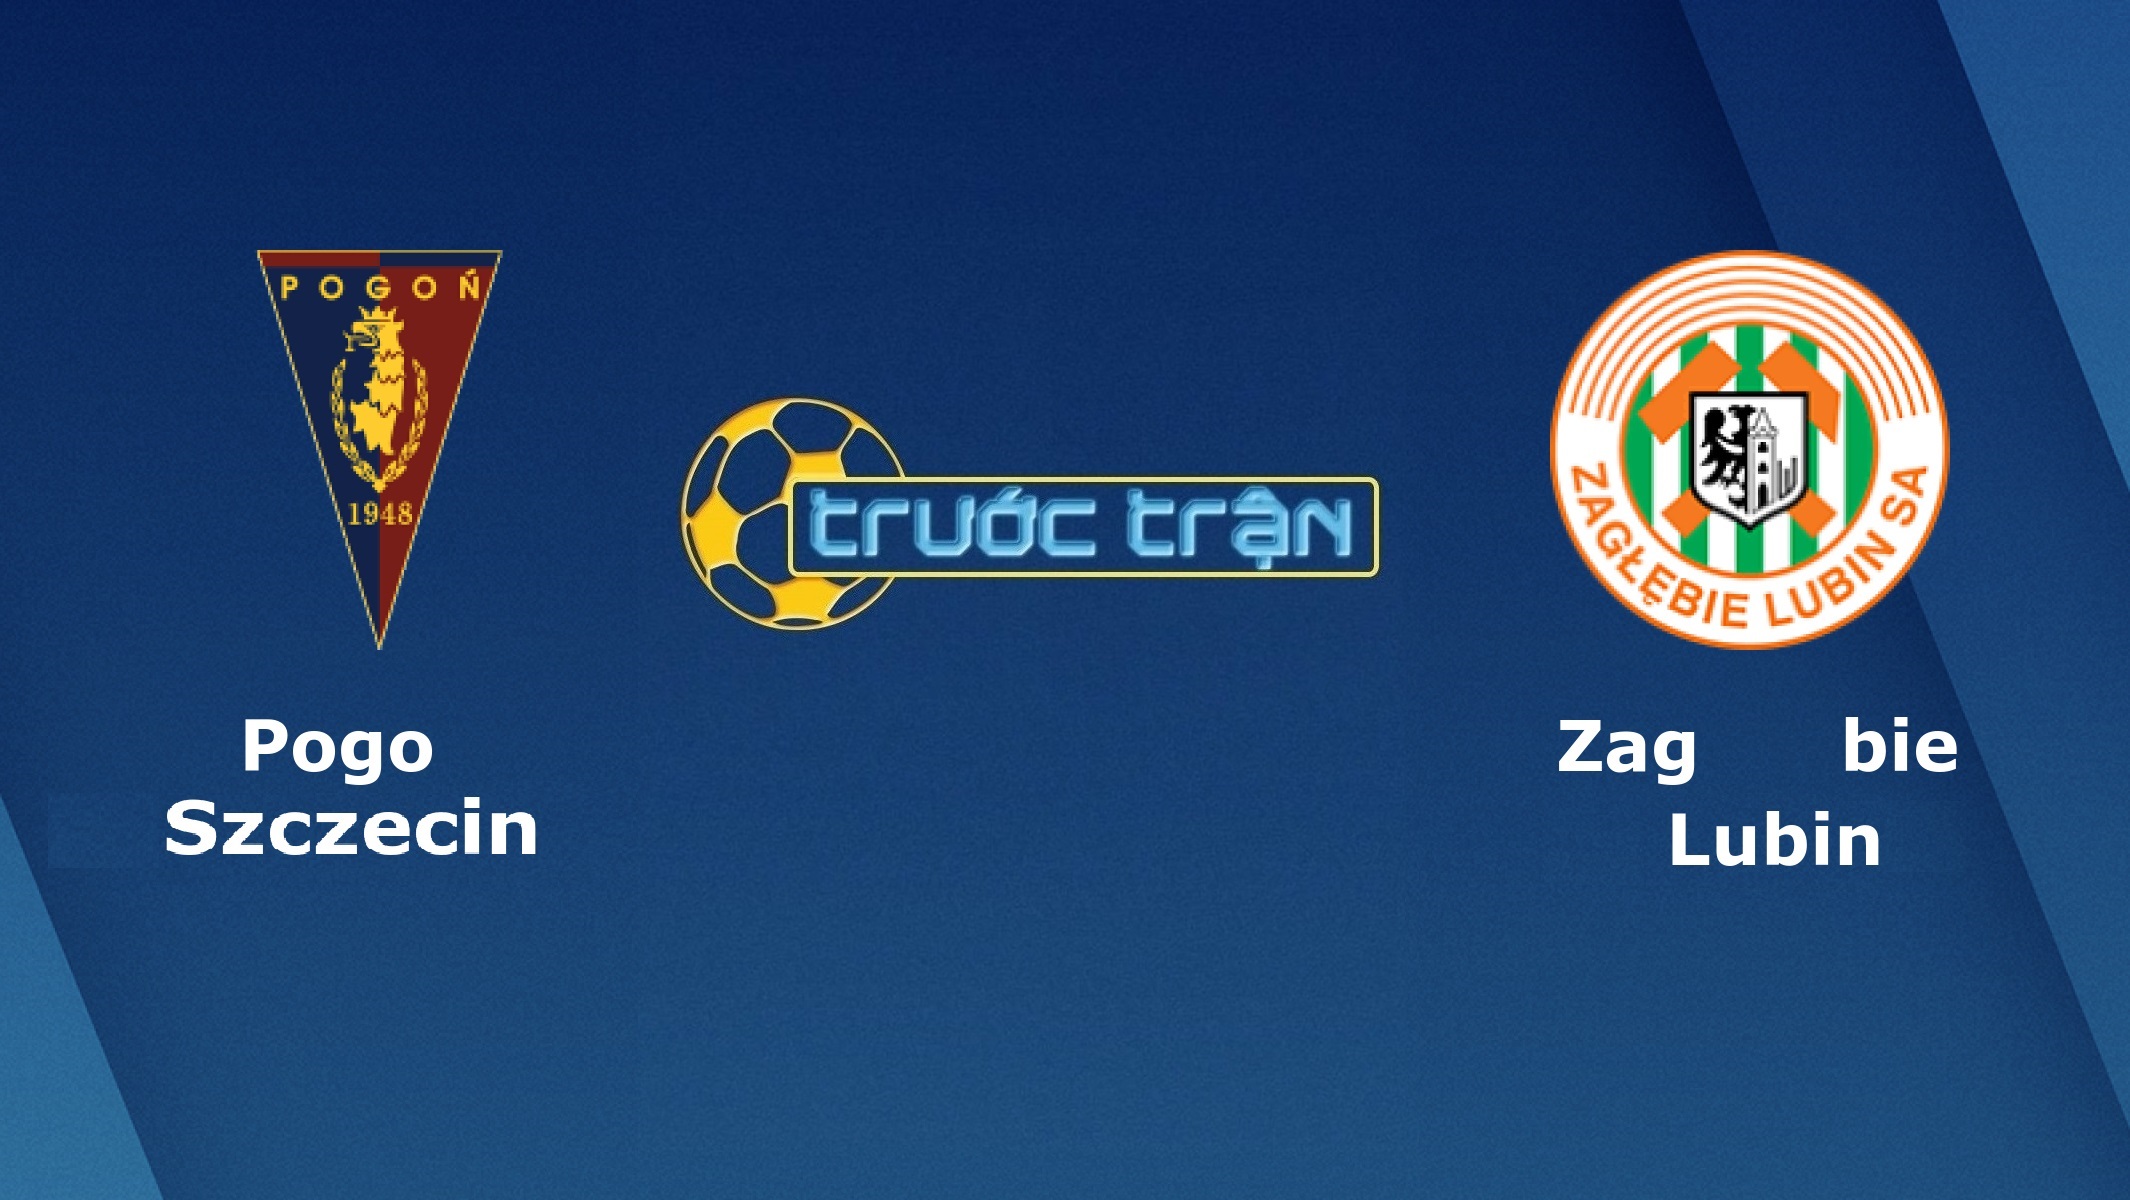 Pogon Szczecin vs Zaglebie Lubin – Tip kèo bóng đá hôm nay – 30/05